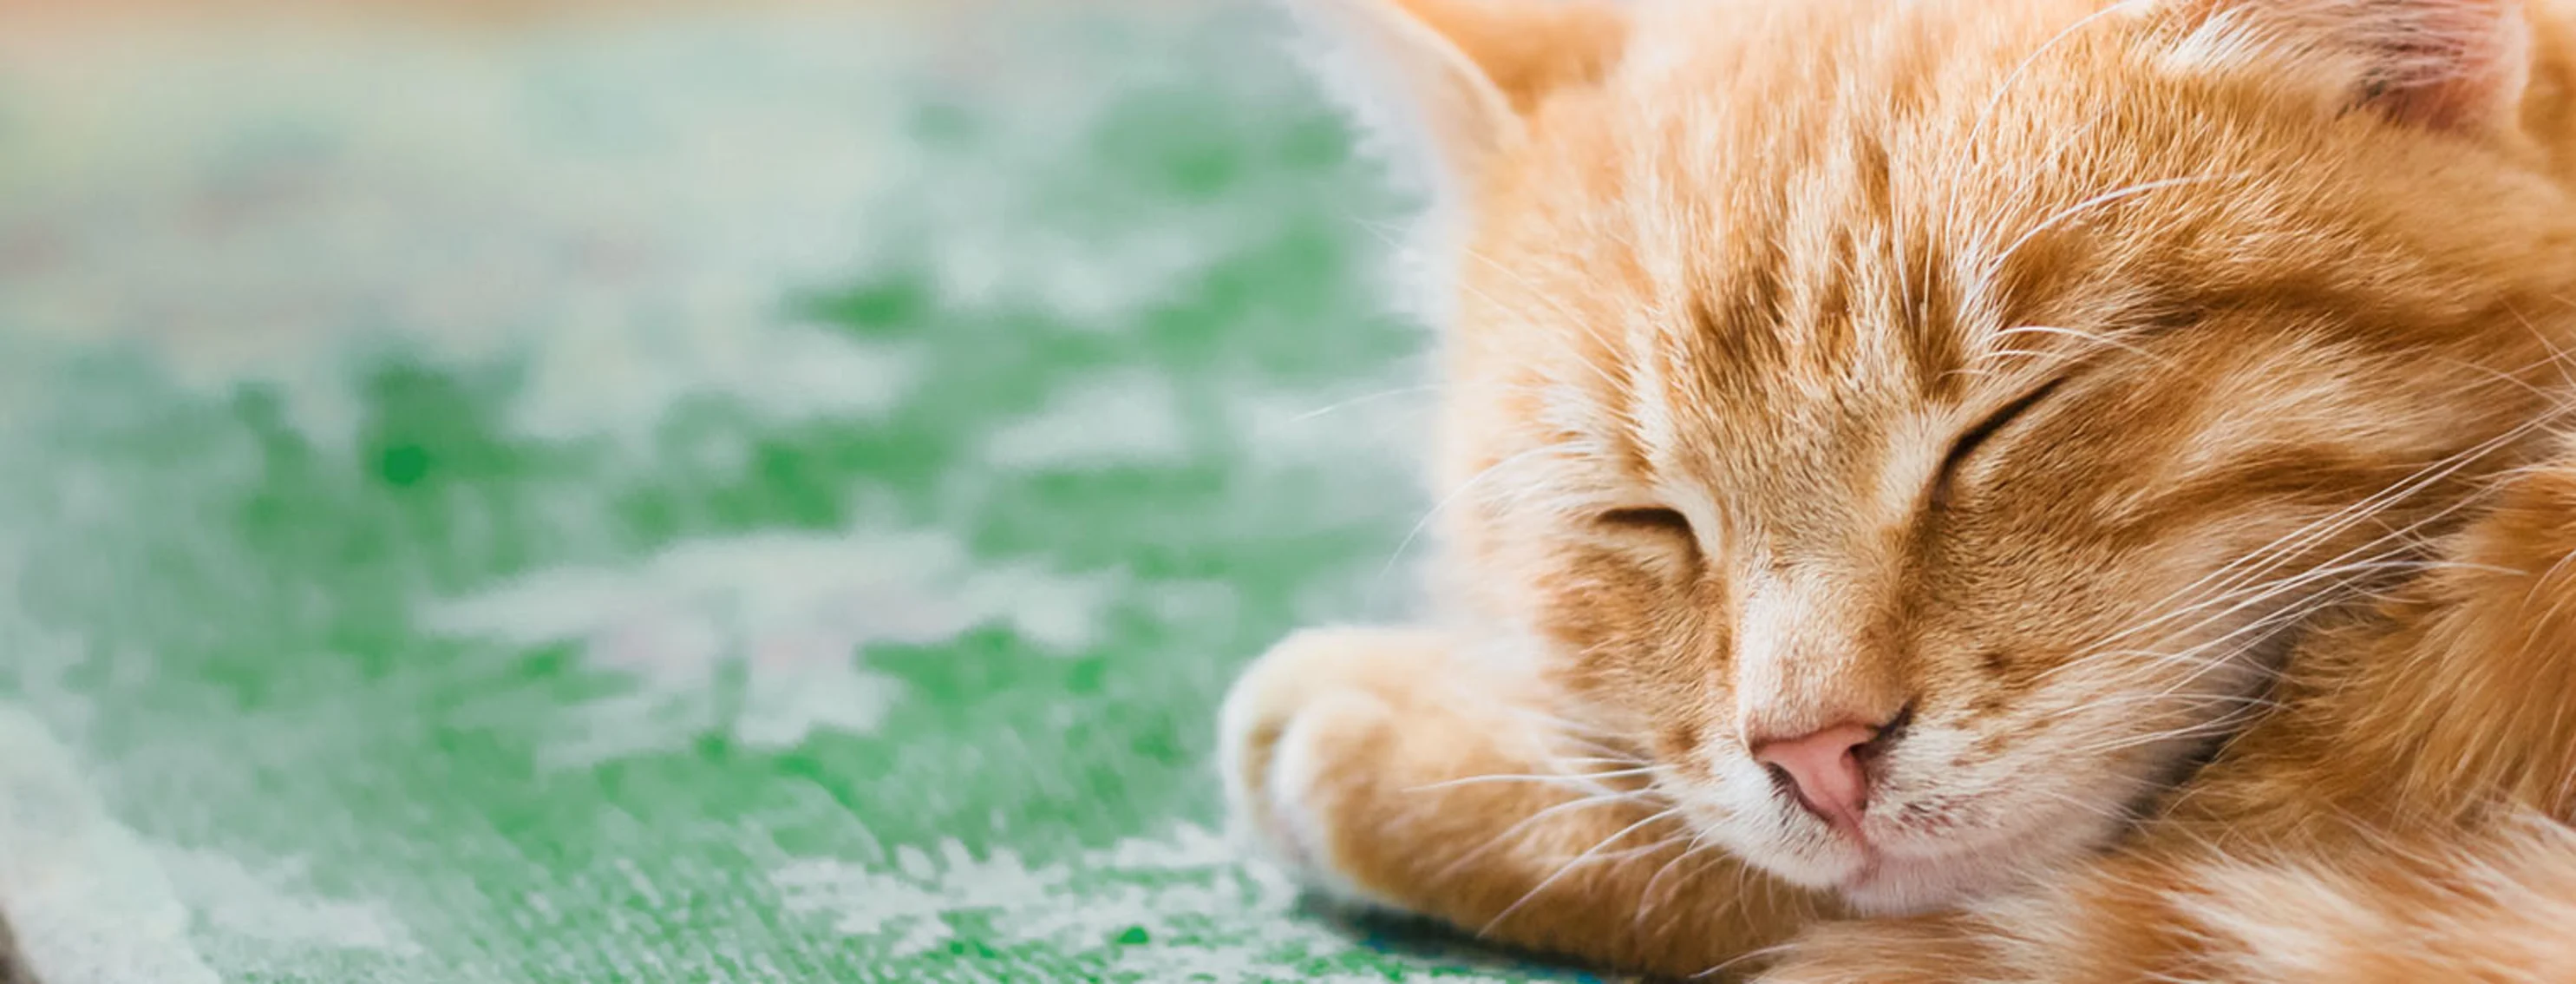 Orange cat sleeping on green rug